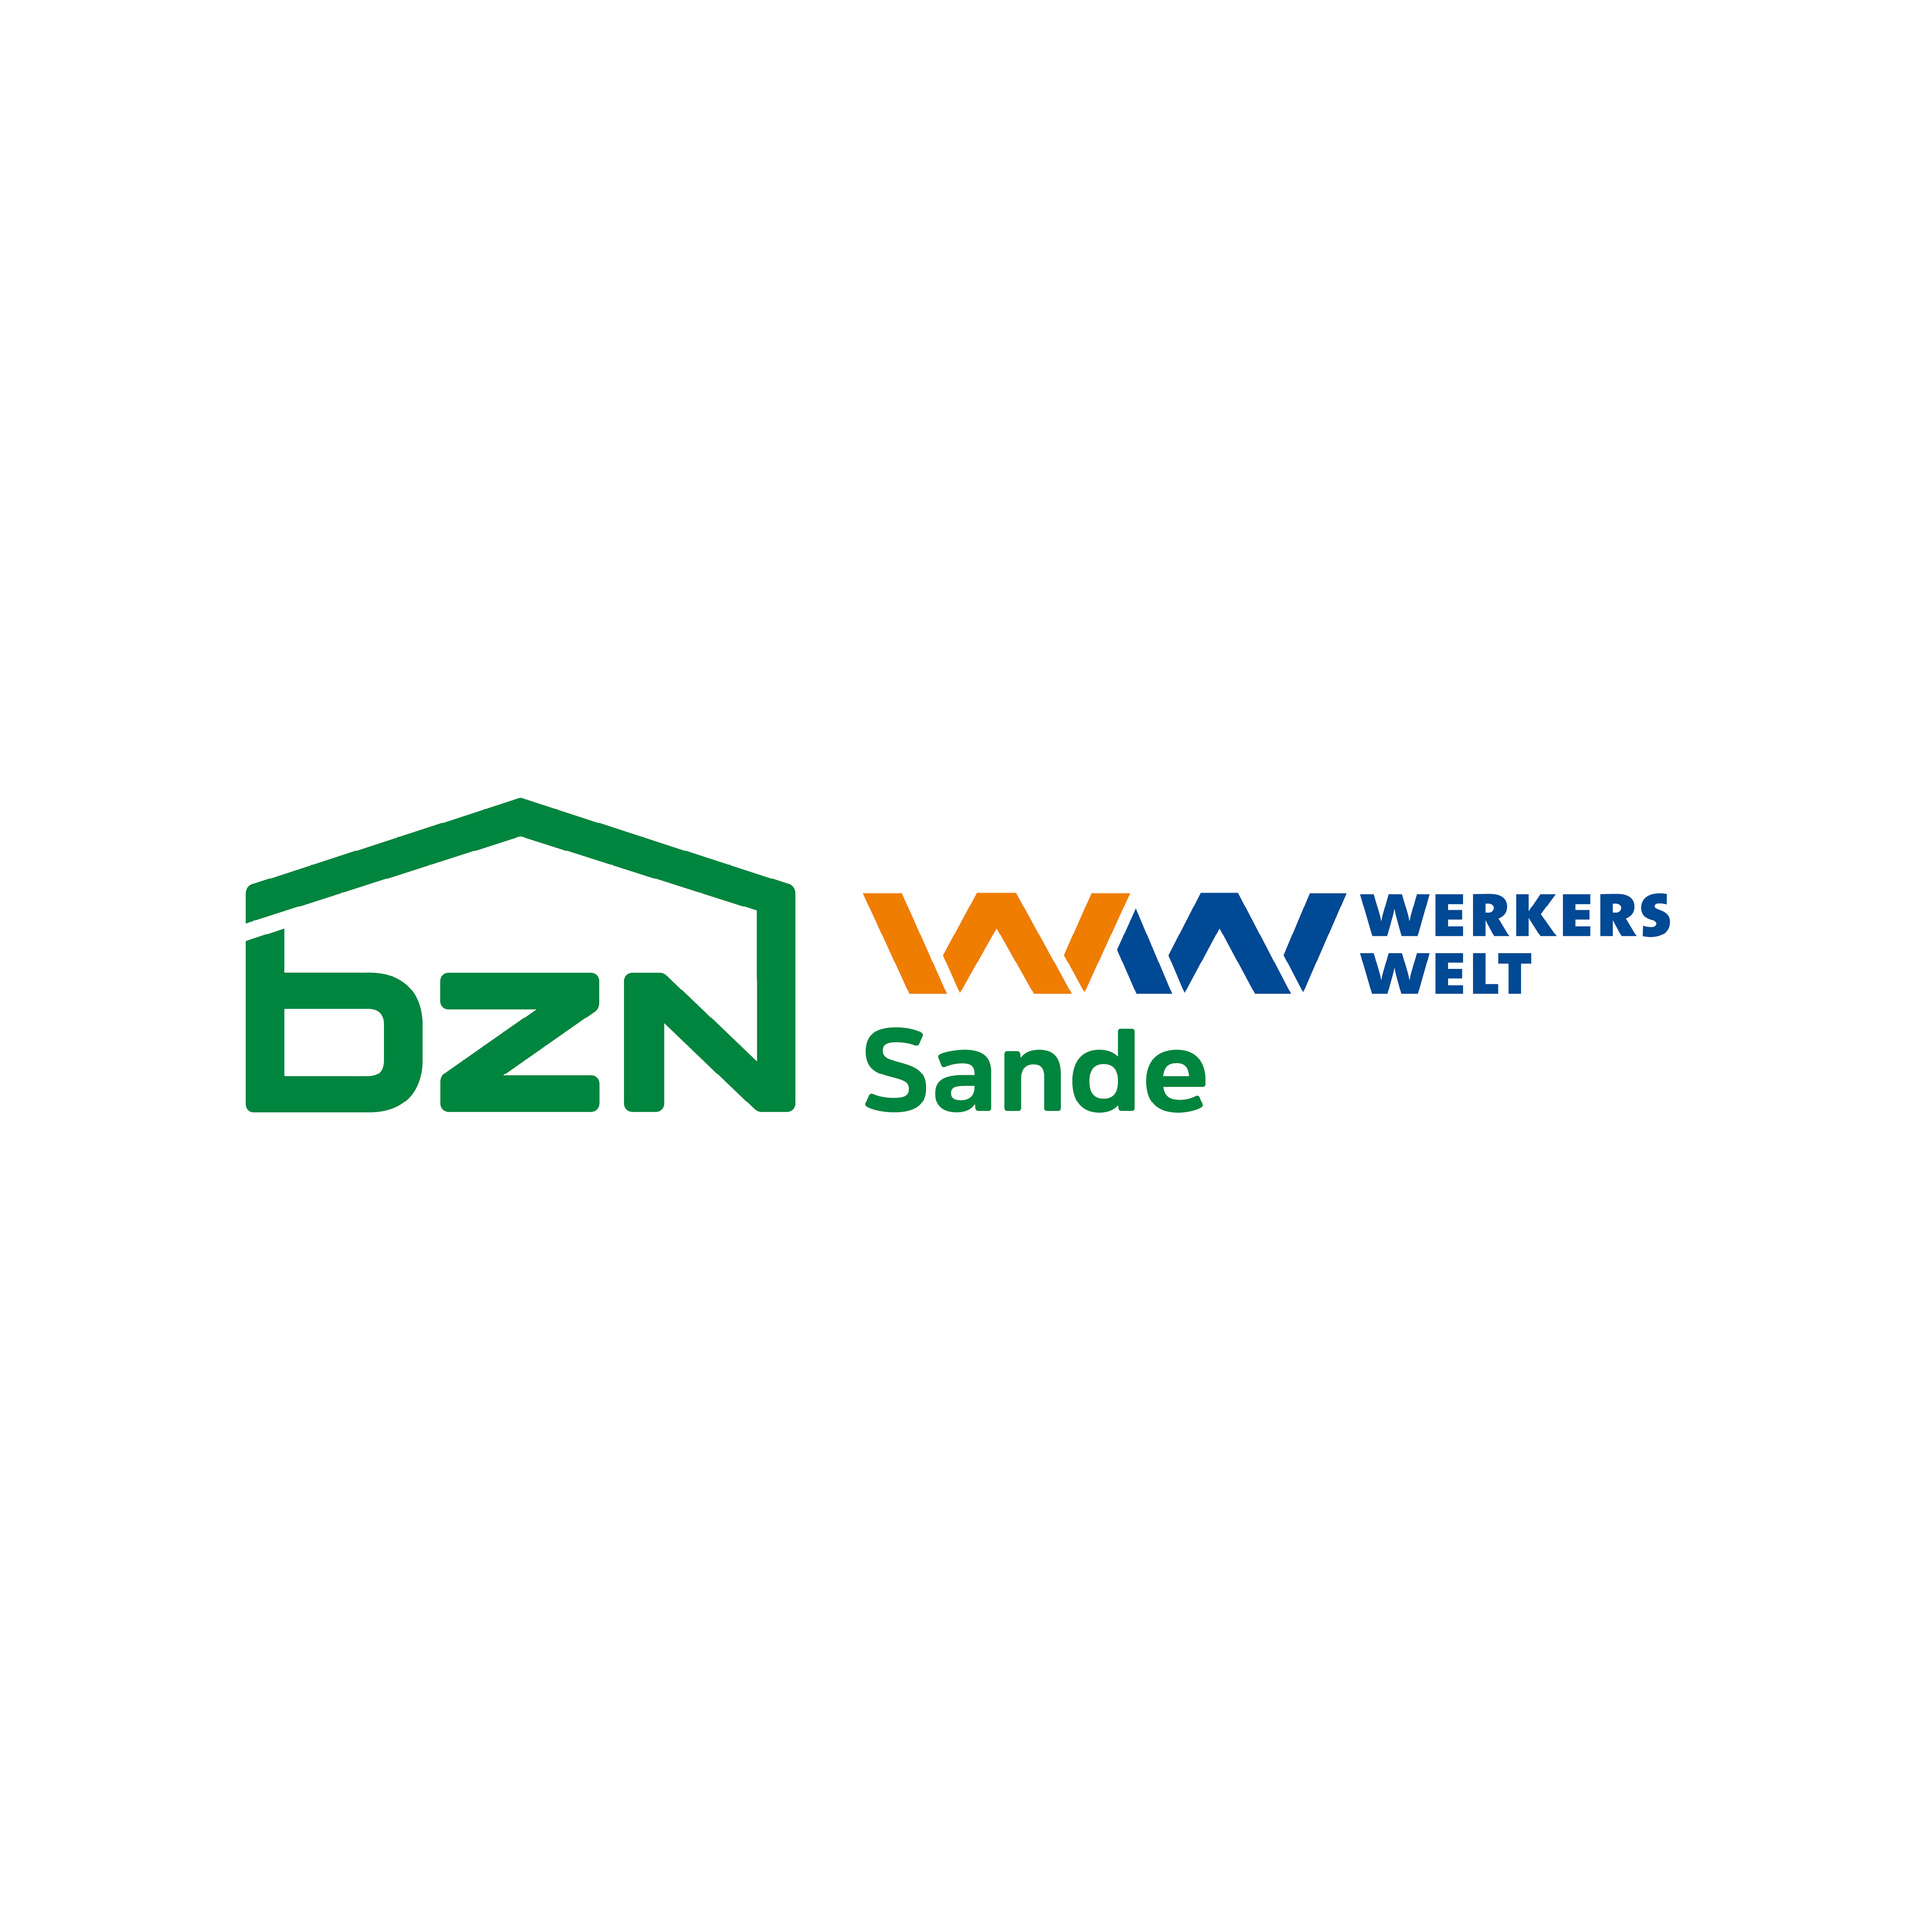 Kundenlogo Werkers Welt Sande - BZN Bauzentrum Sande GmbH & Co. KG